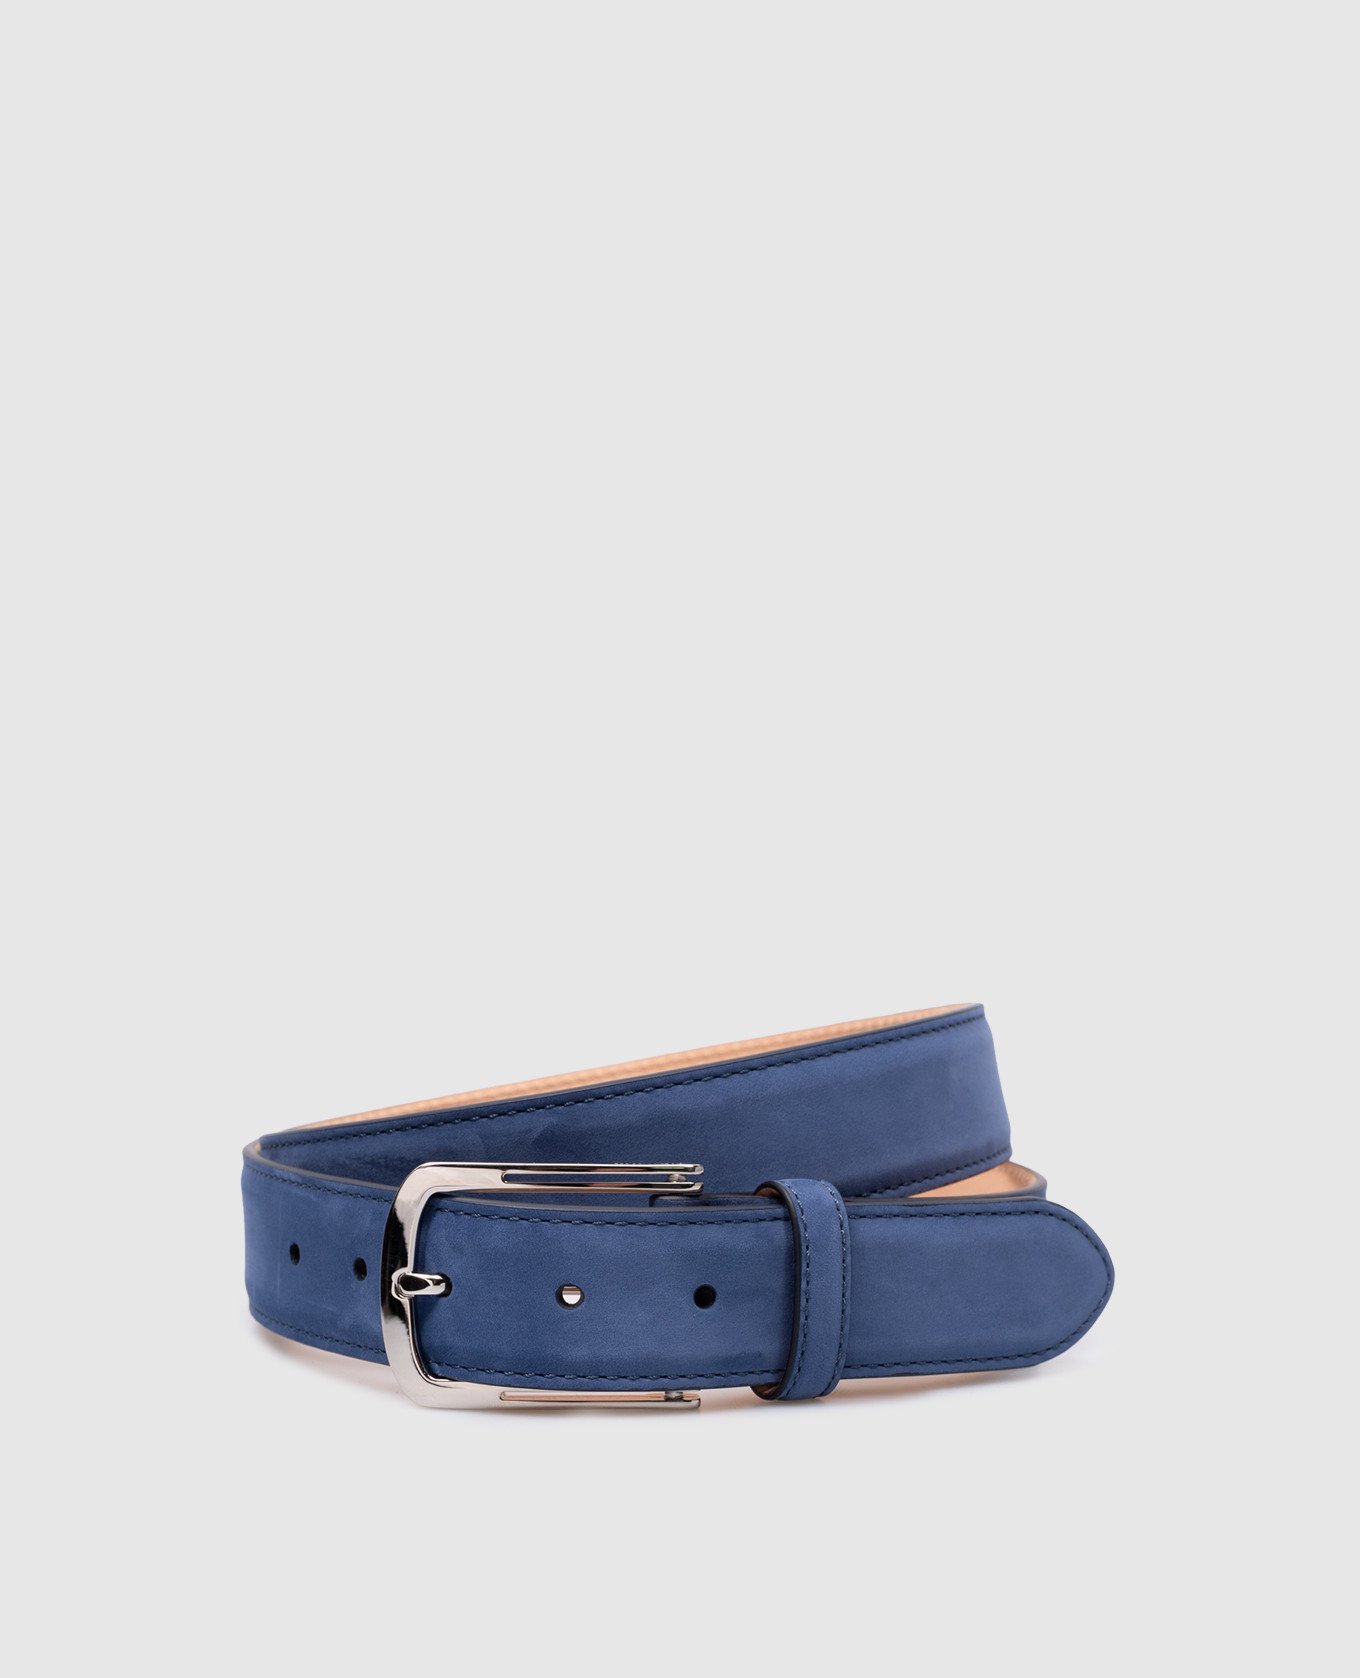 Blue suede belt with logo